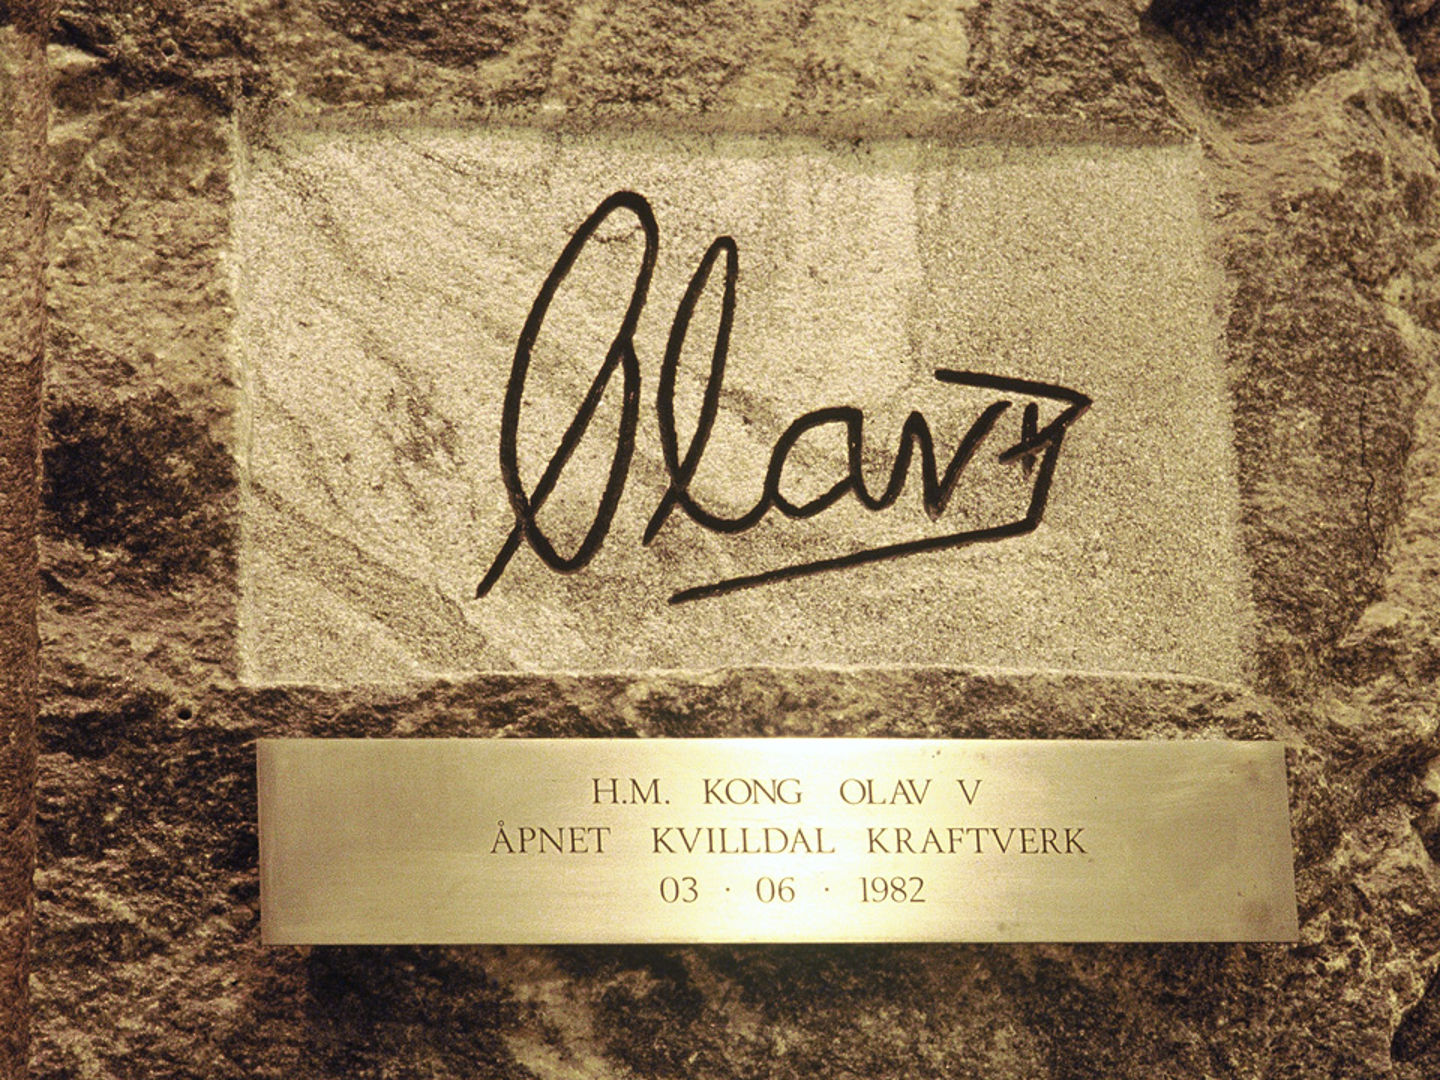 King Olav's signature